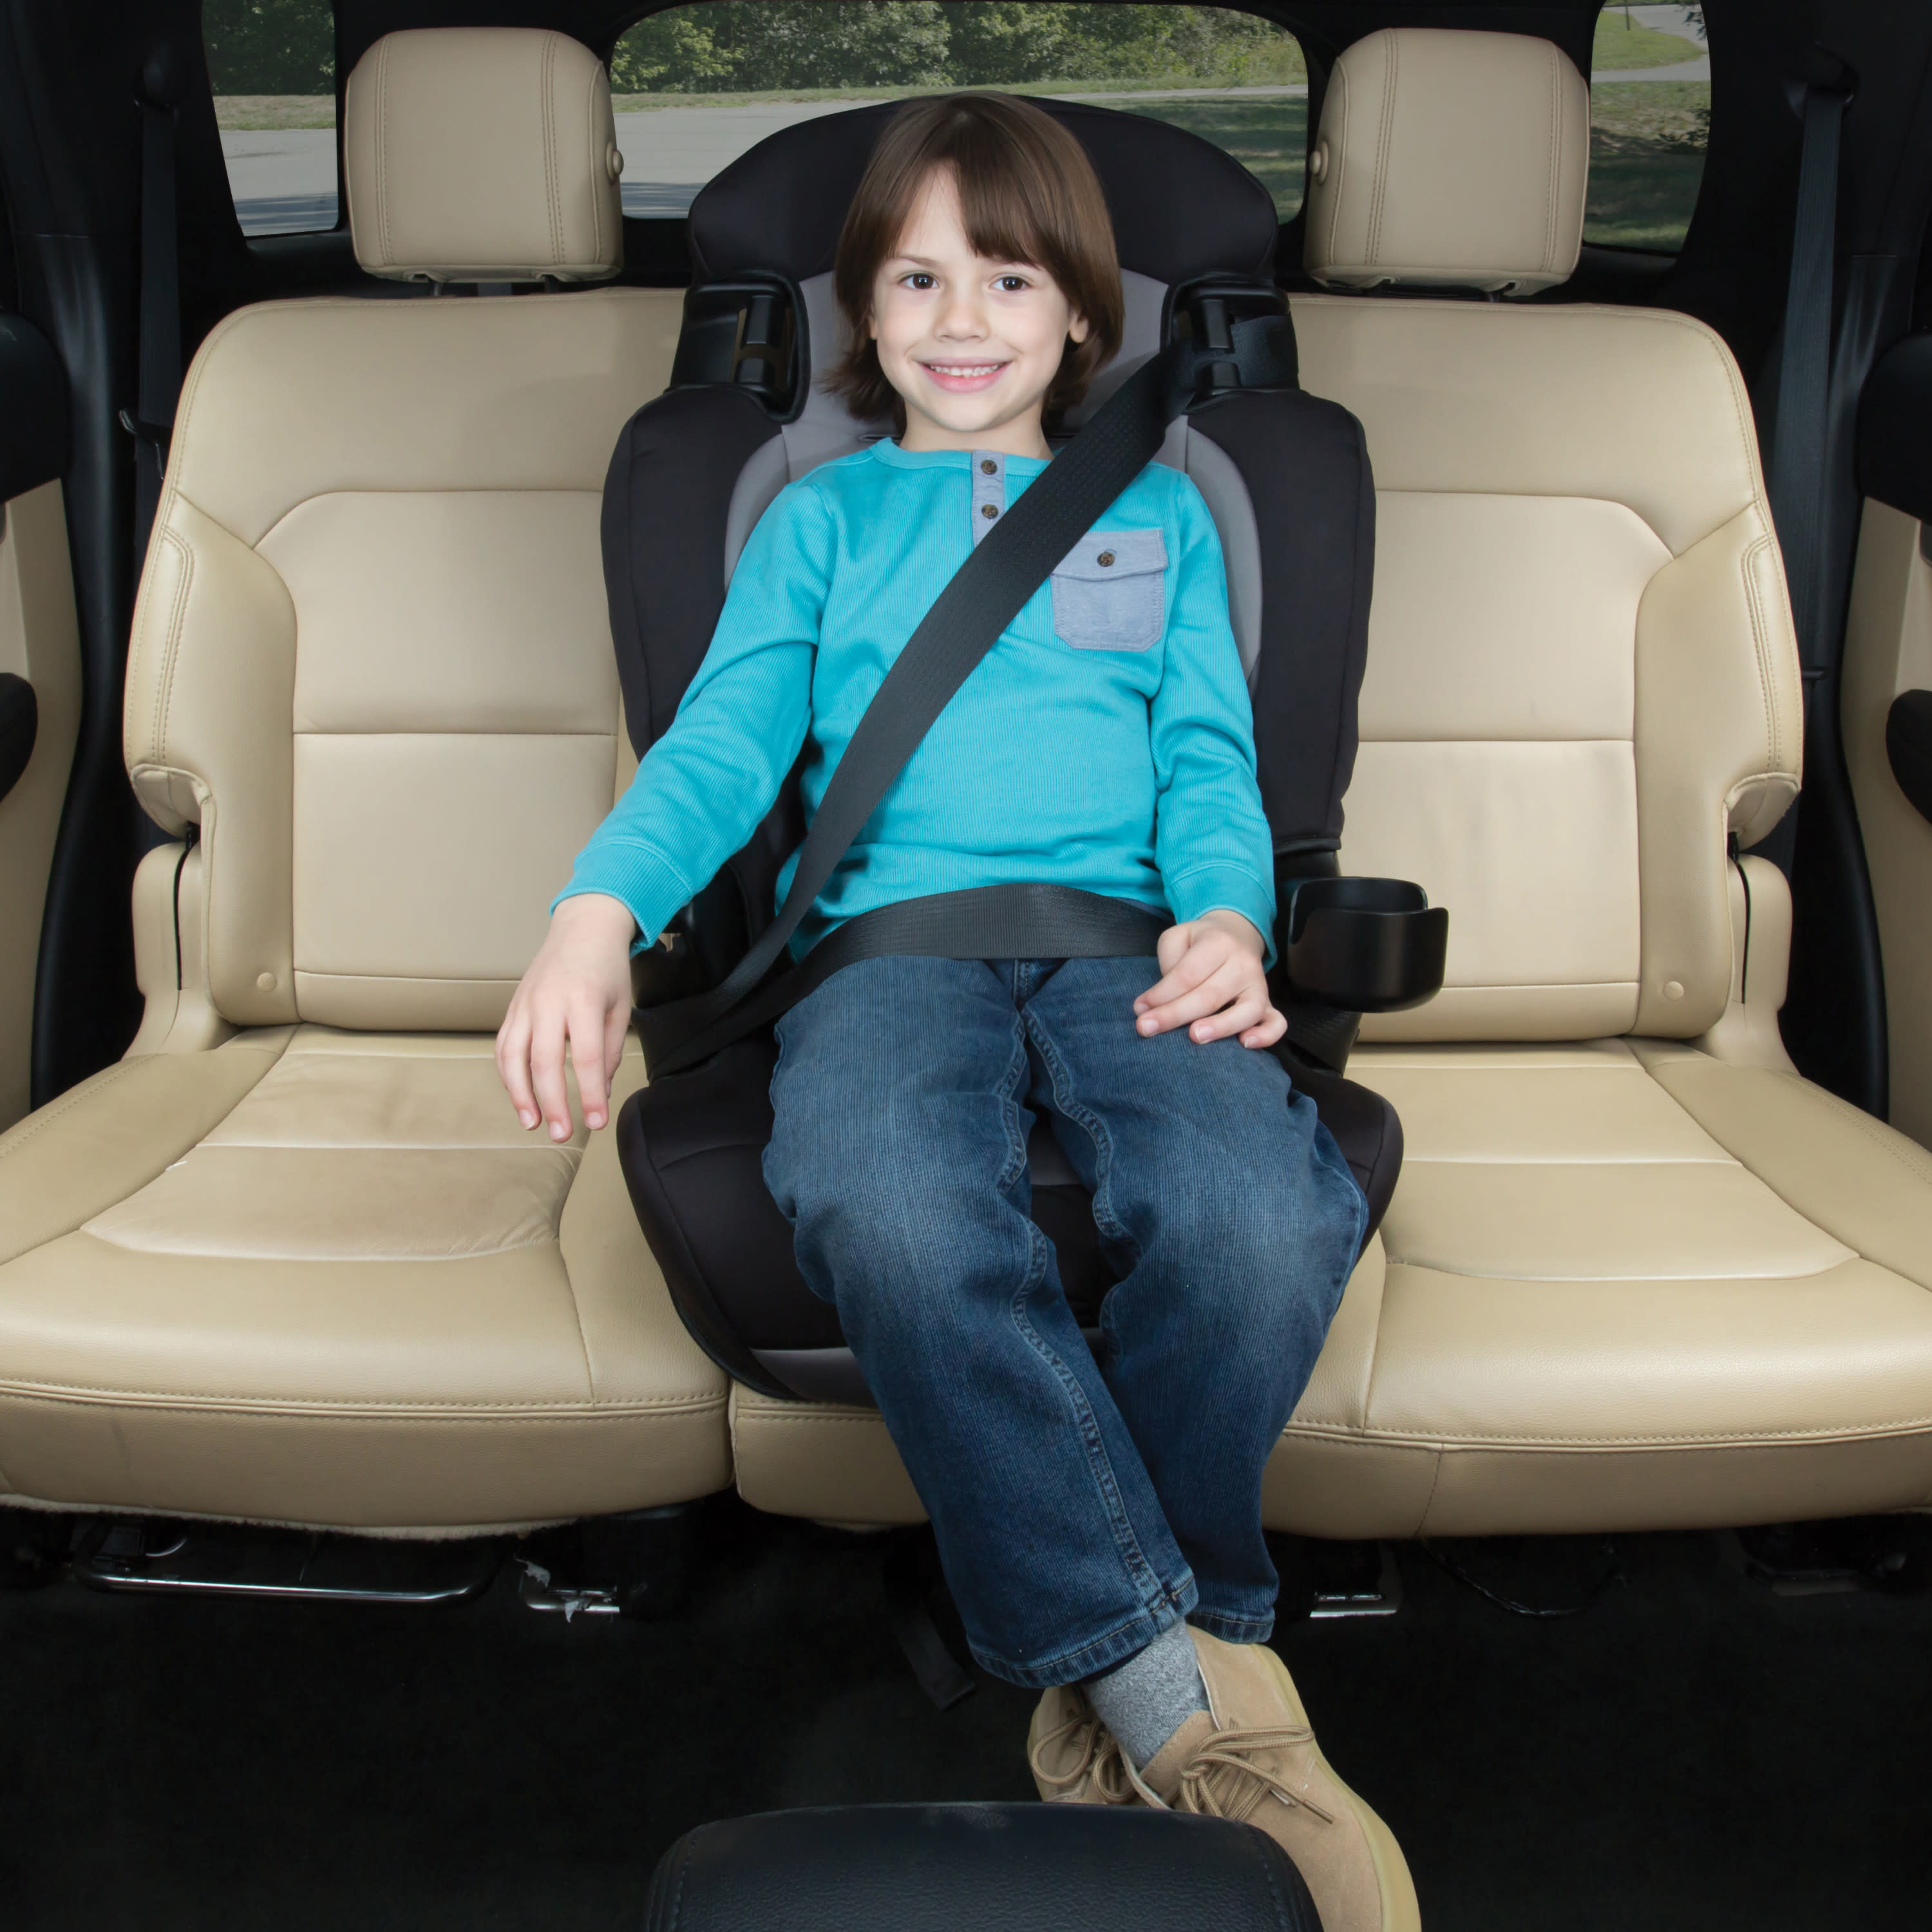 Cosco Kids Finale 2-in-1 Booster Car Seat, Fiberwave - image 5 of 17